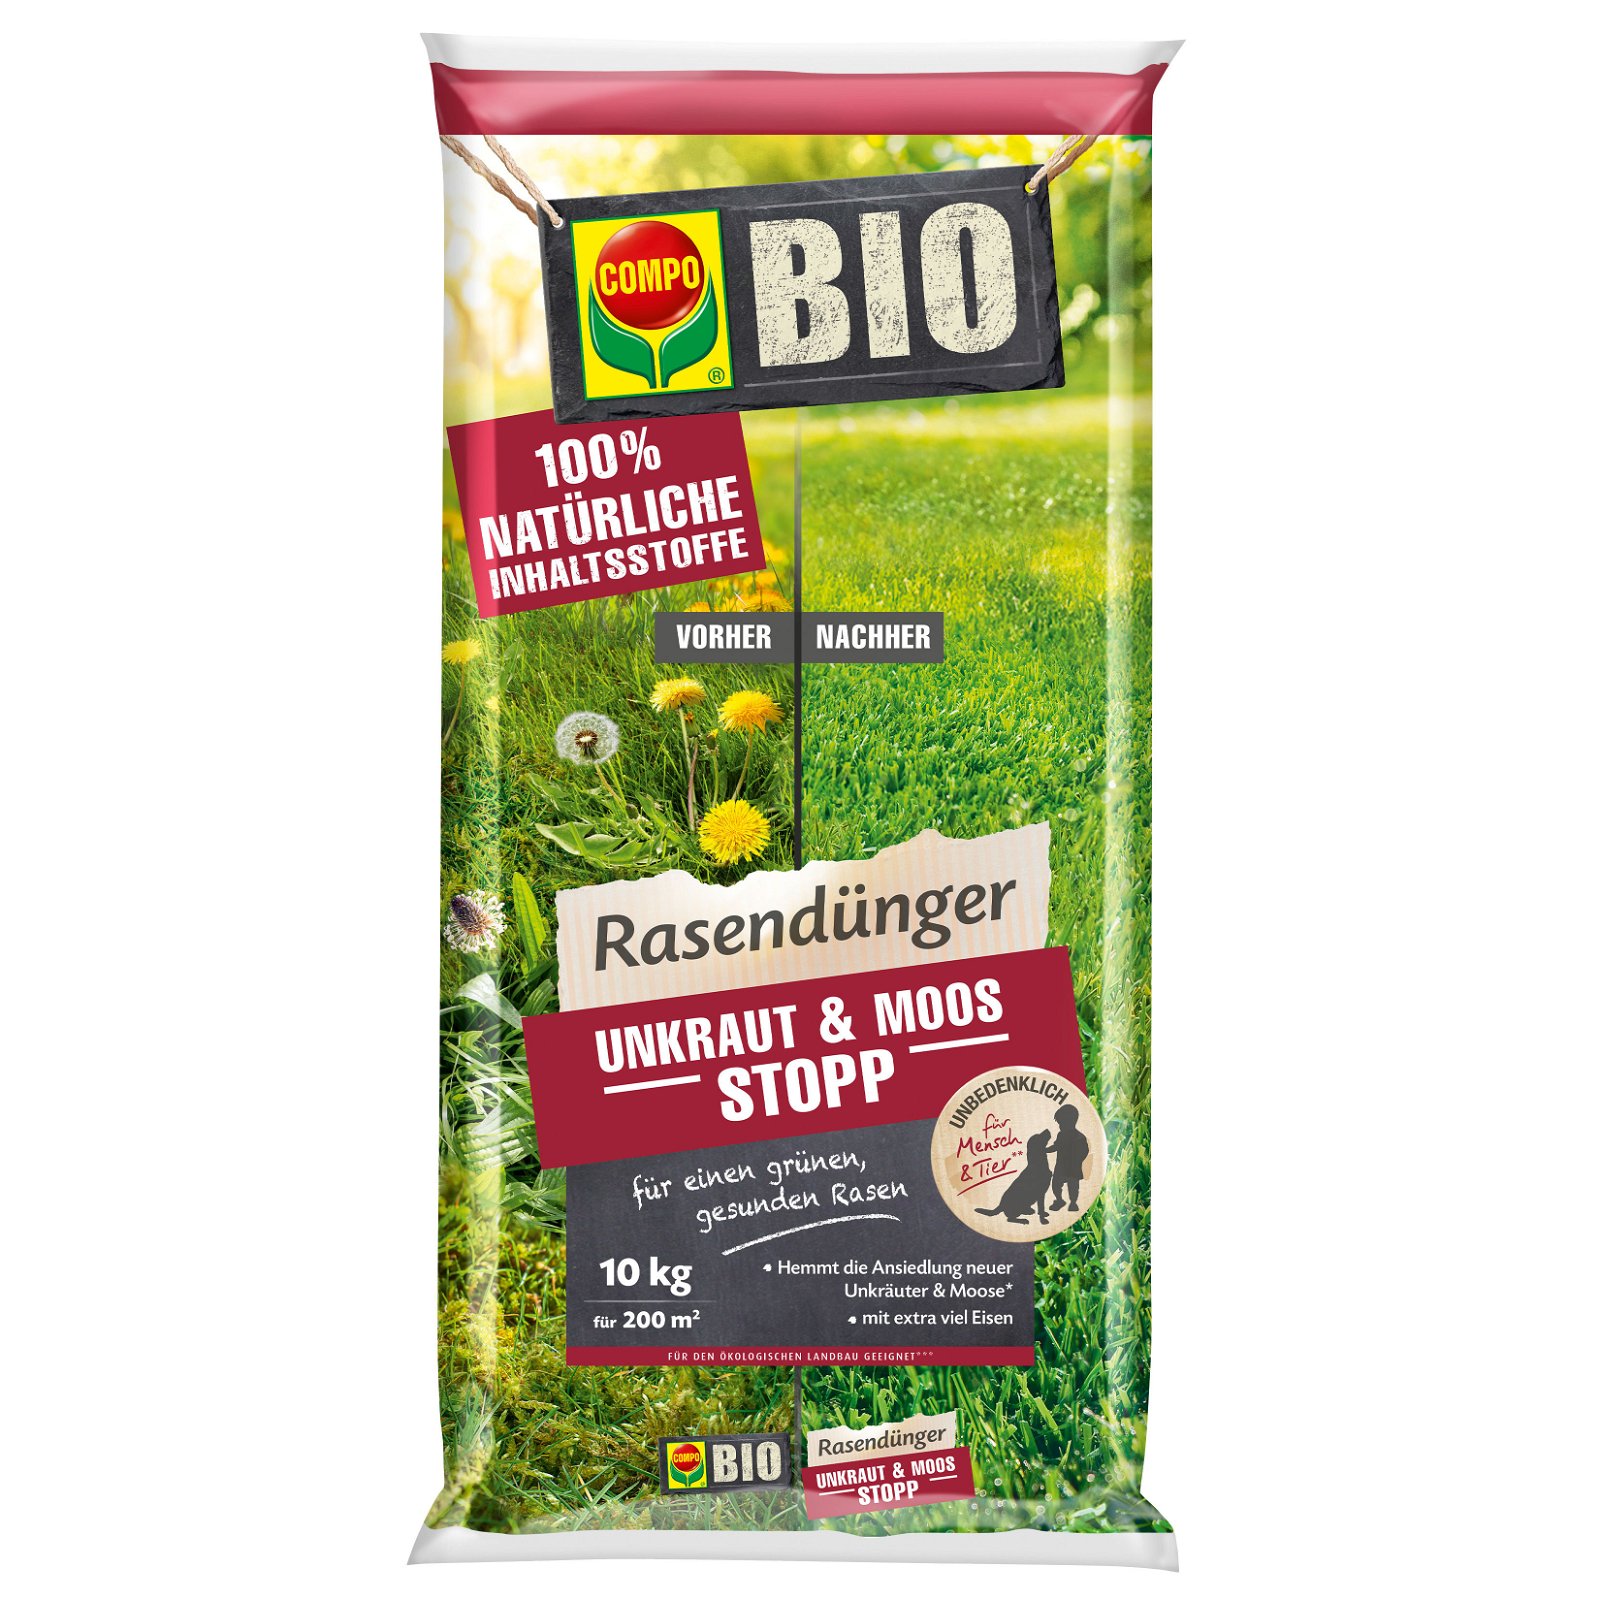 Compo Bio Rasendünger Unkraut & Moos Stopp, 10 kg